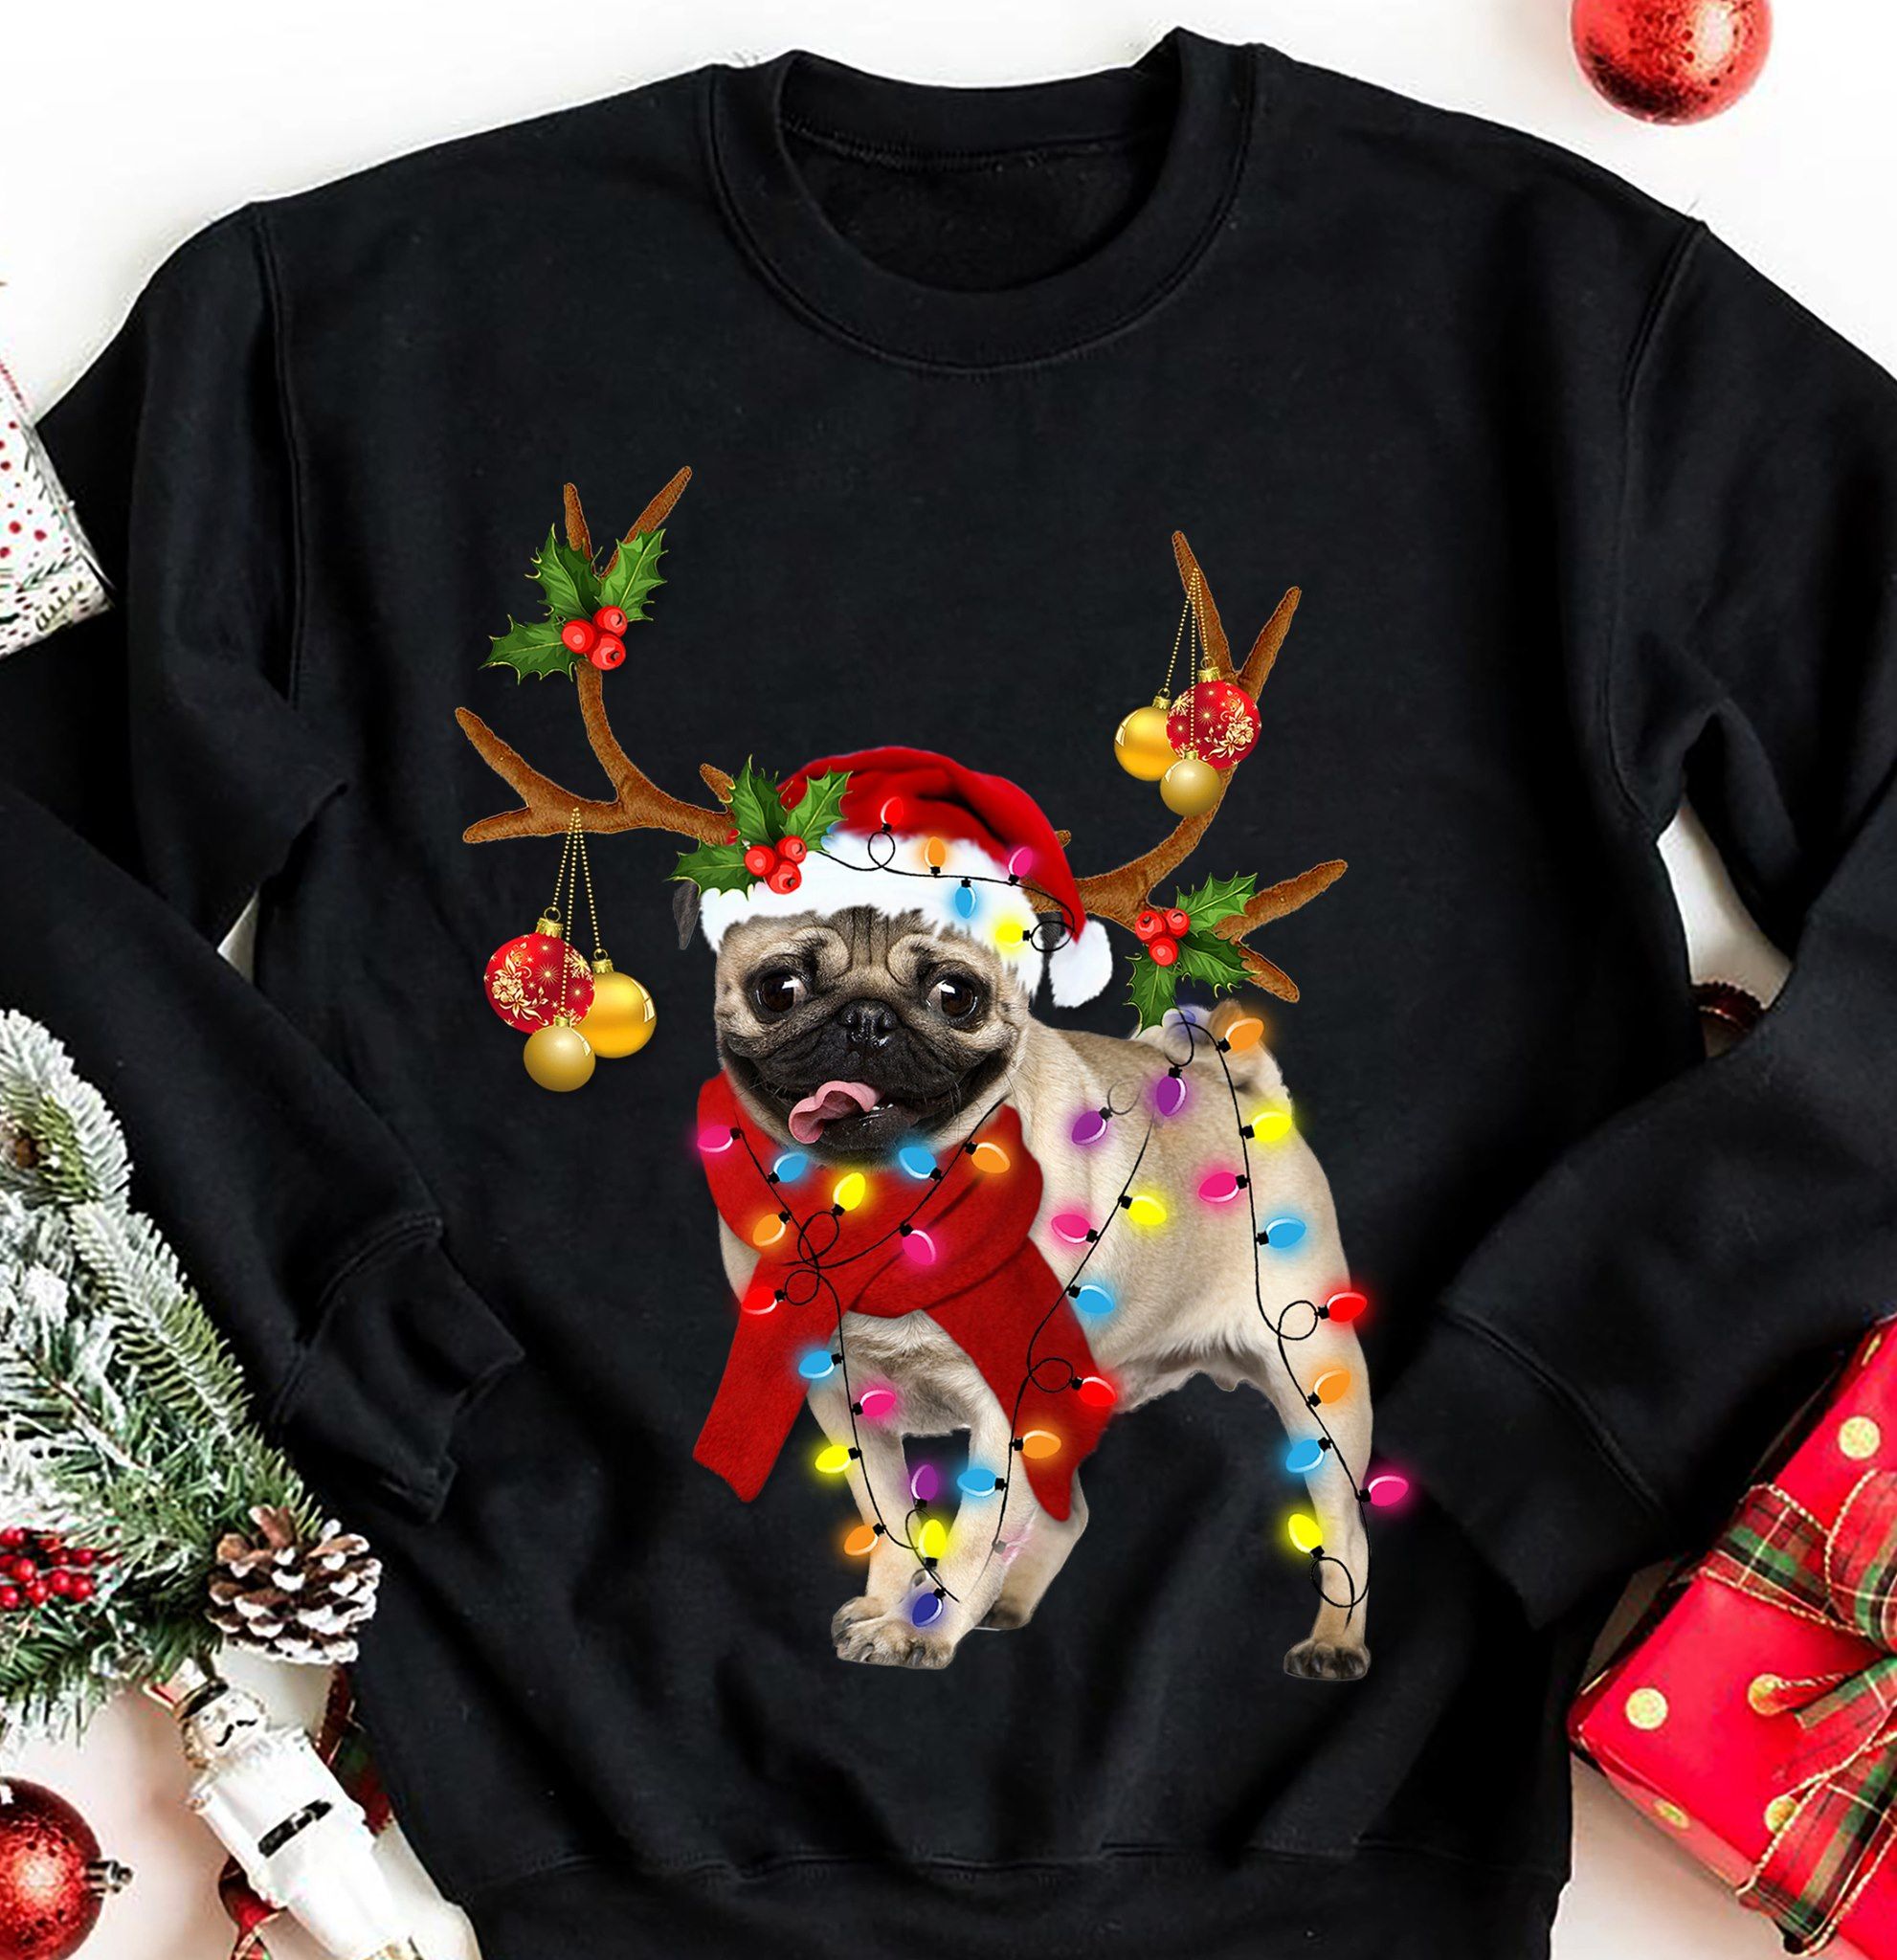 Chistmas Raindeer Pug, Gift for Pug lover - Bauble And Fairy Lights, Merry Christmas